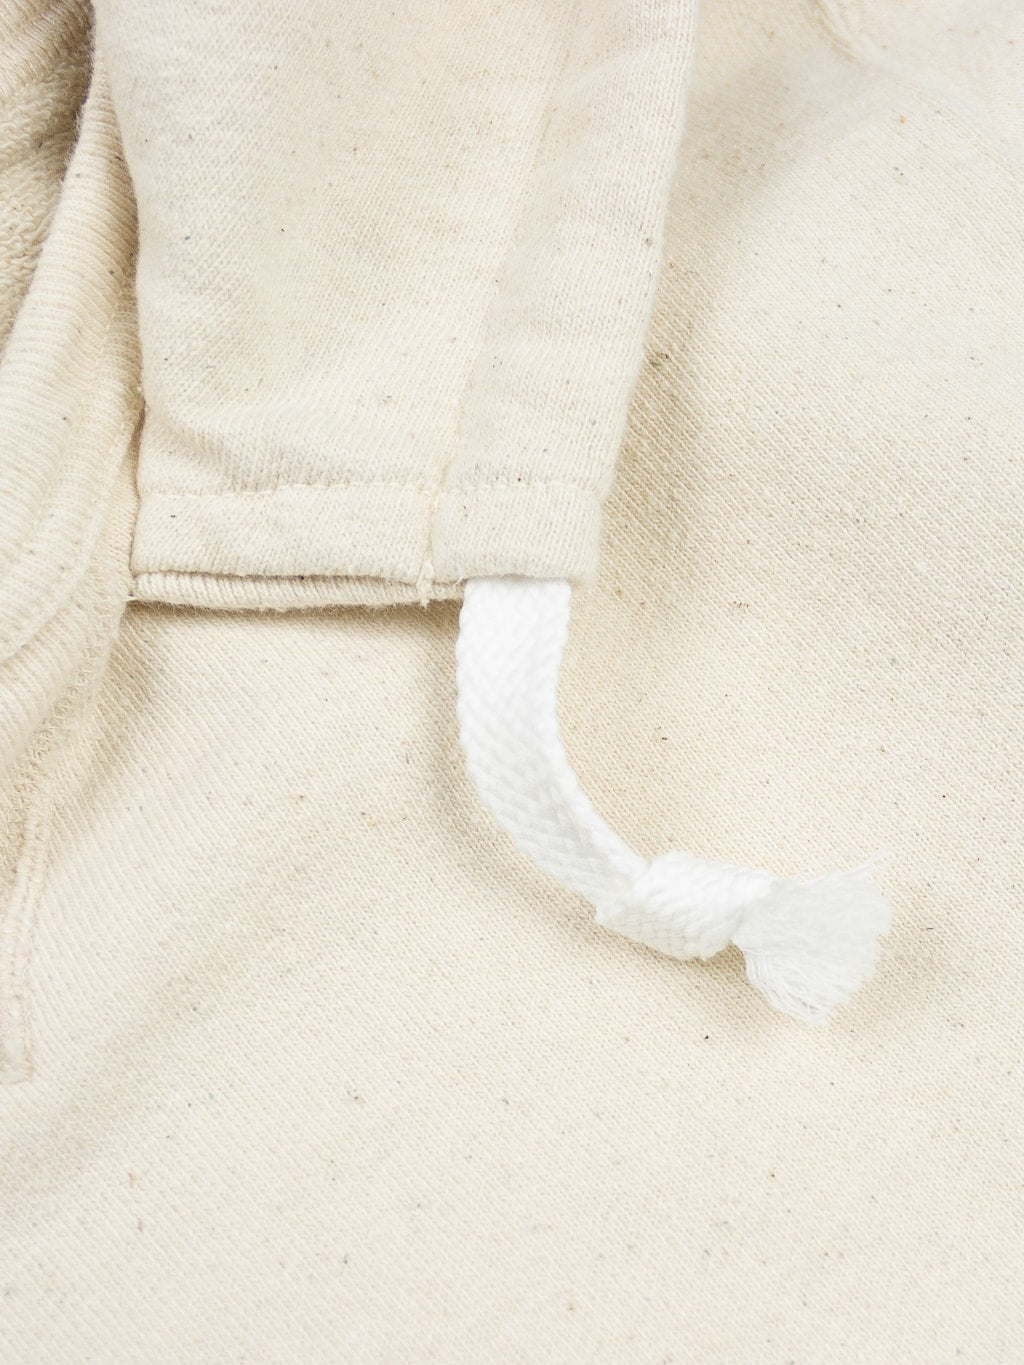 Samurai Jeans Japanese Cotton Hoody Natural sweatshirt texture